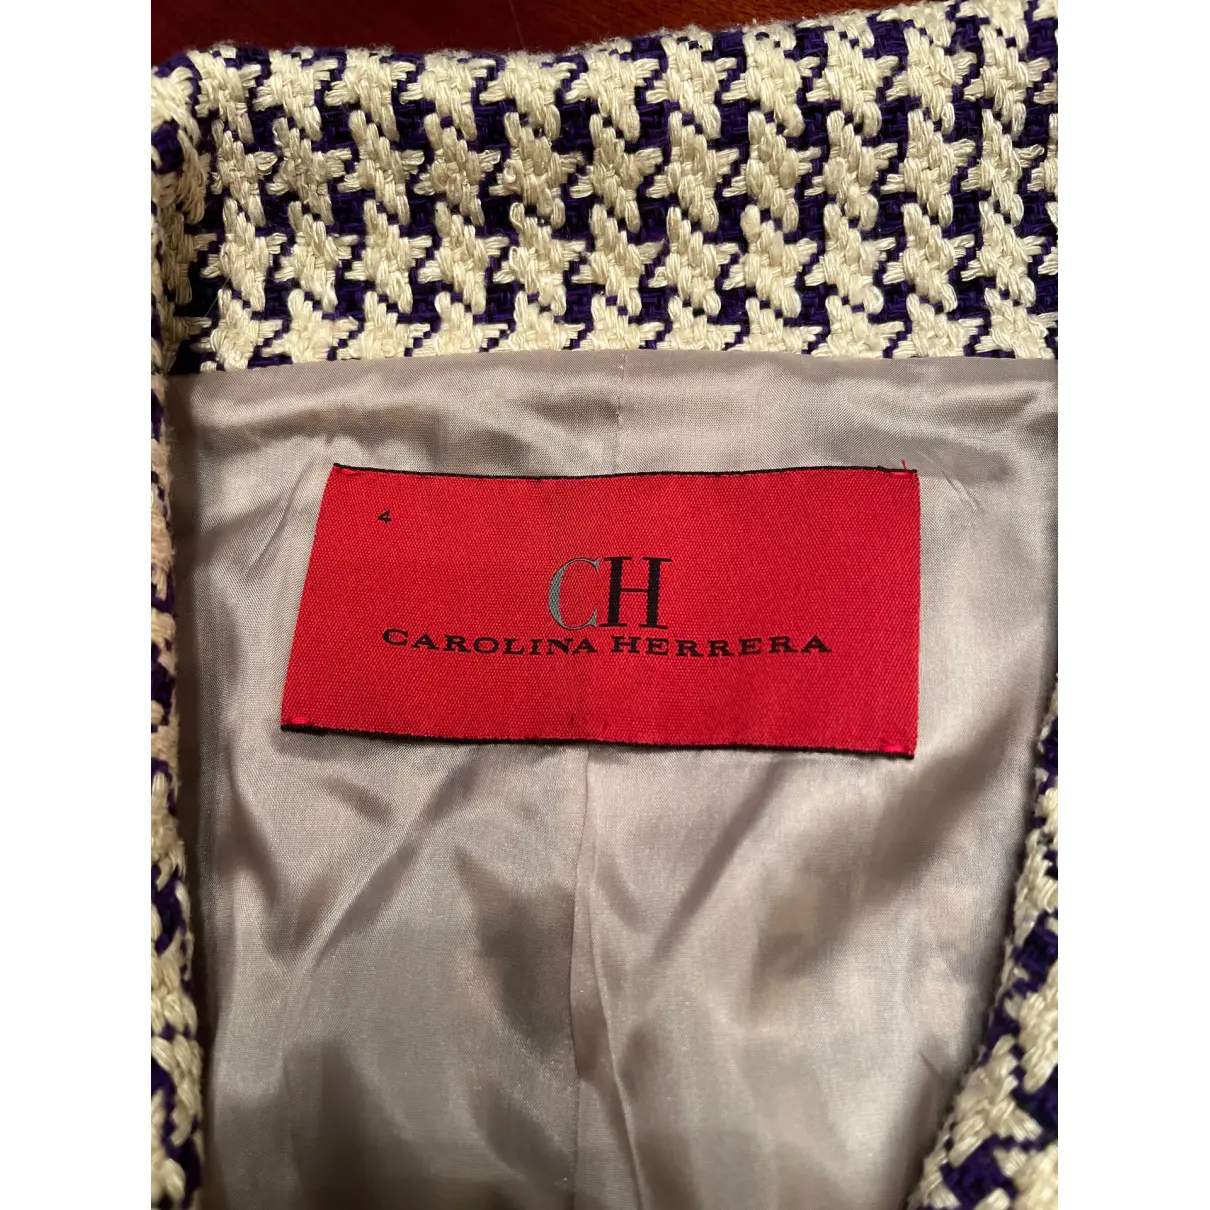 Buy Carolina Herrera Wool short vest online